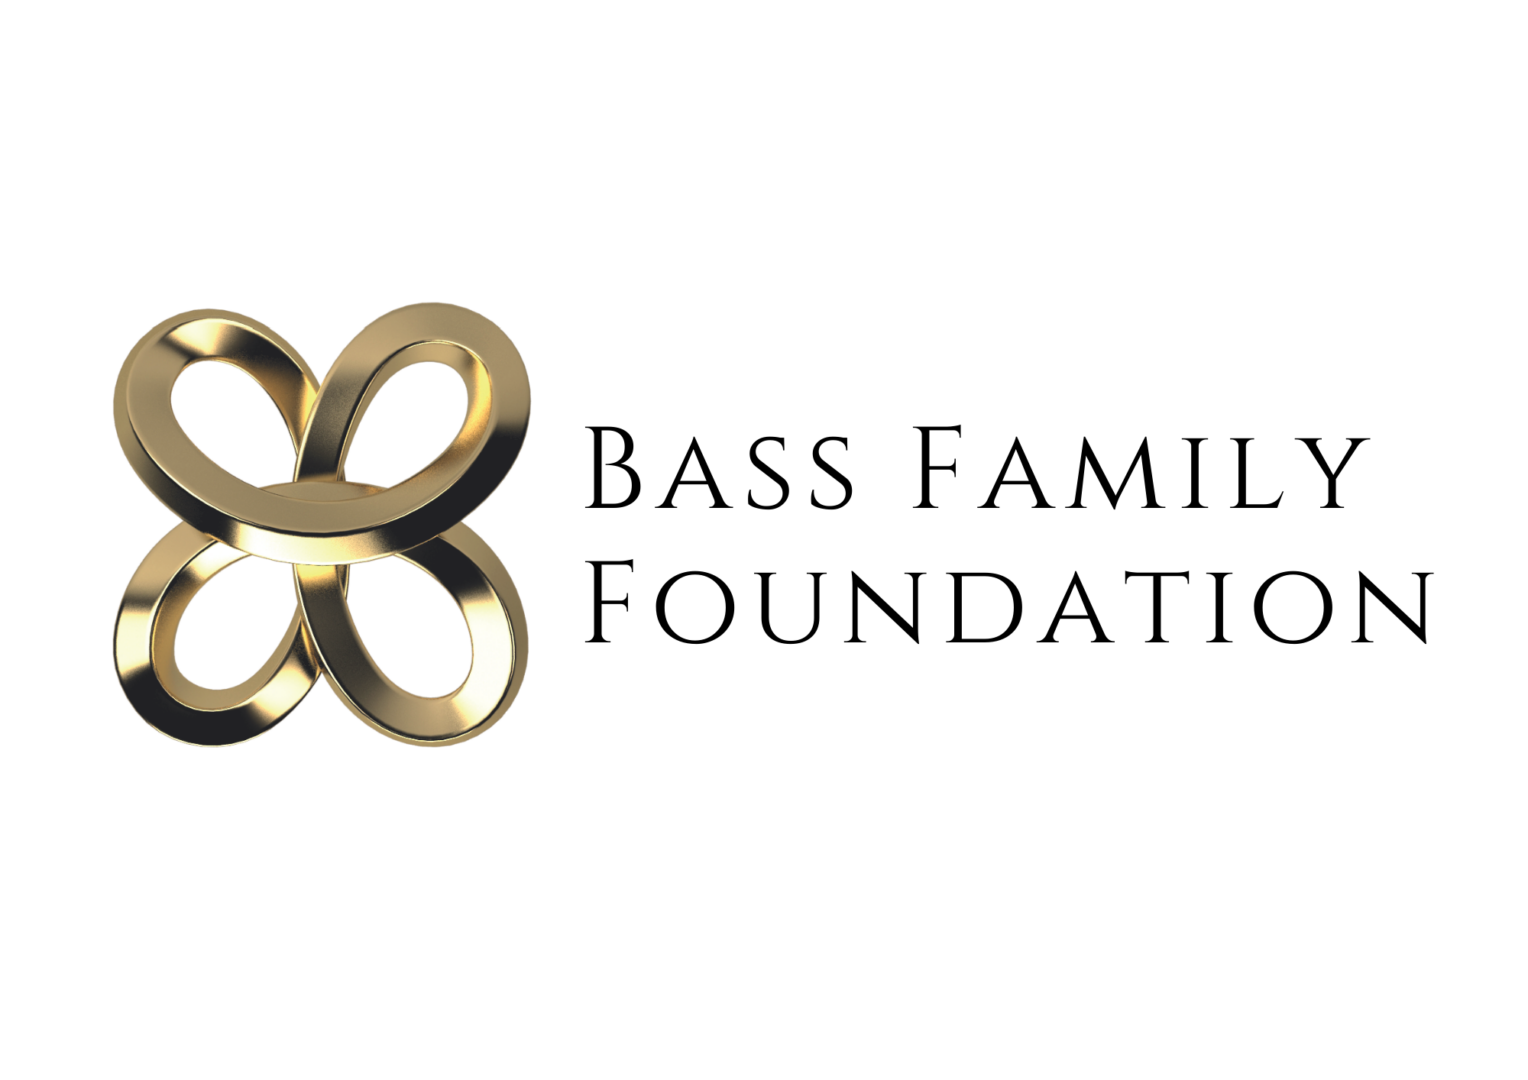 Bass Family Foundation logo